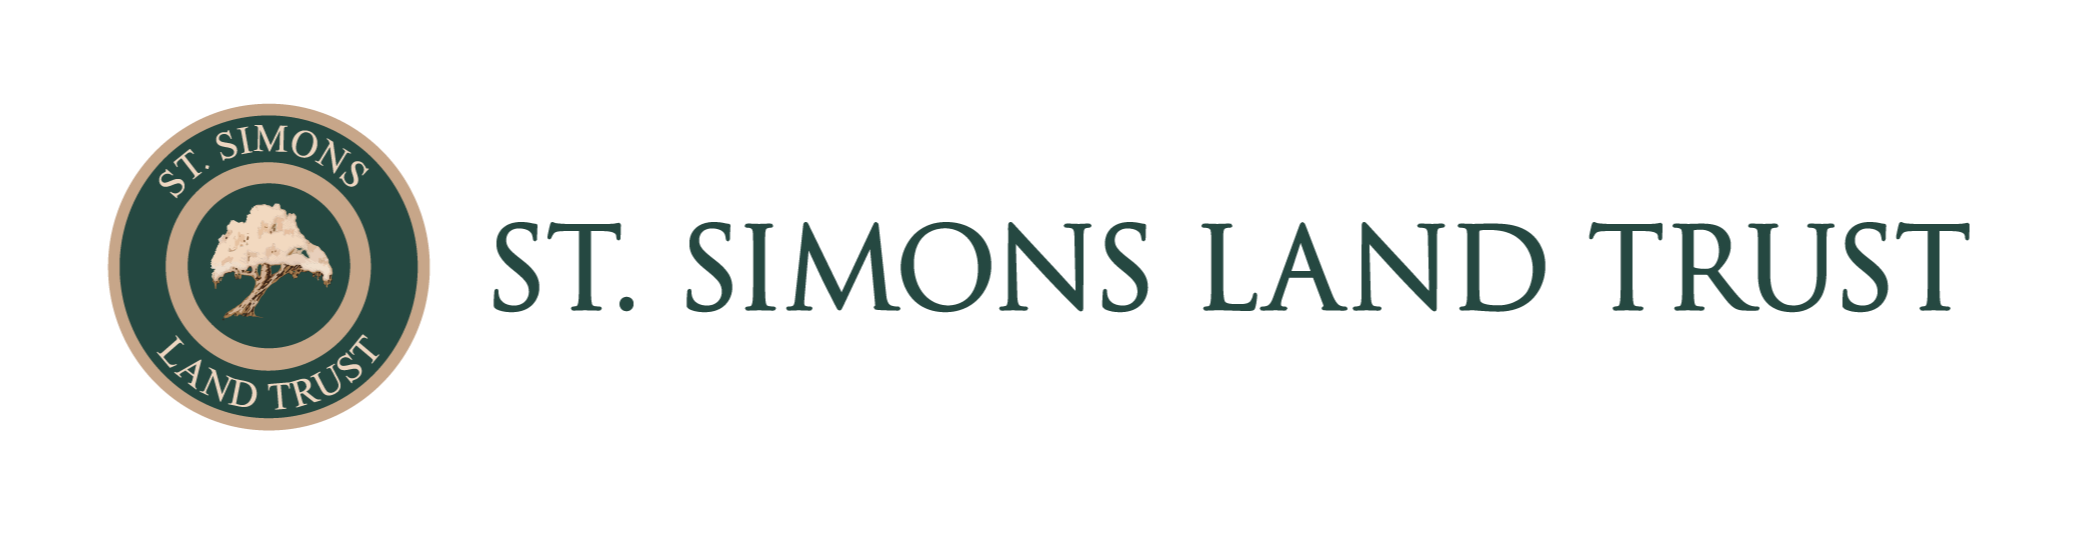 St. Simons Land Trust Inc logo